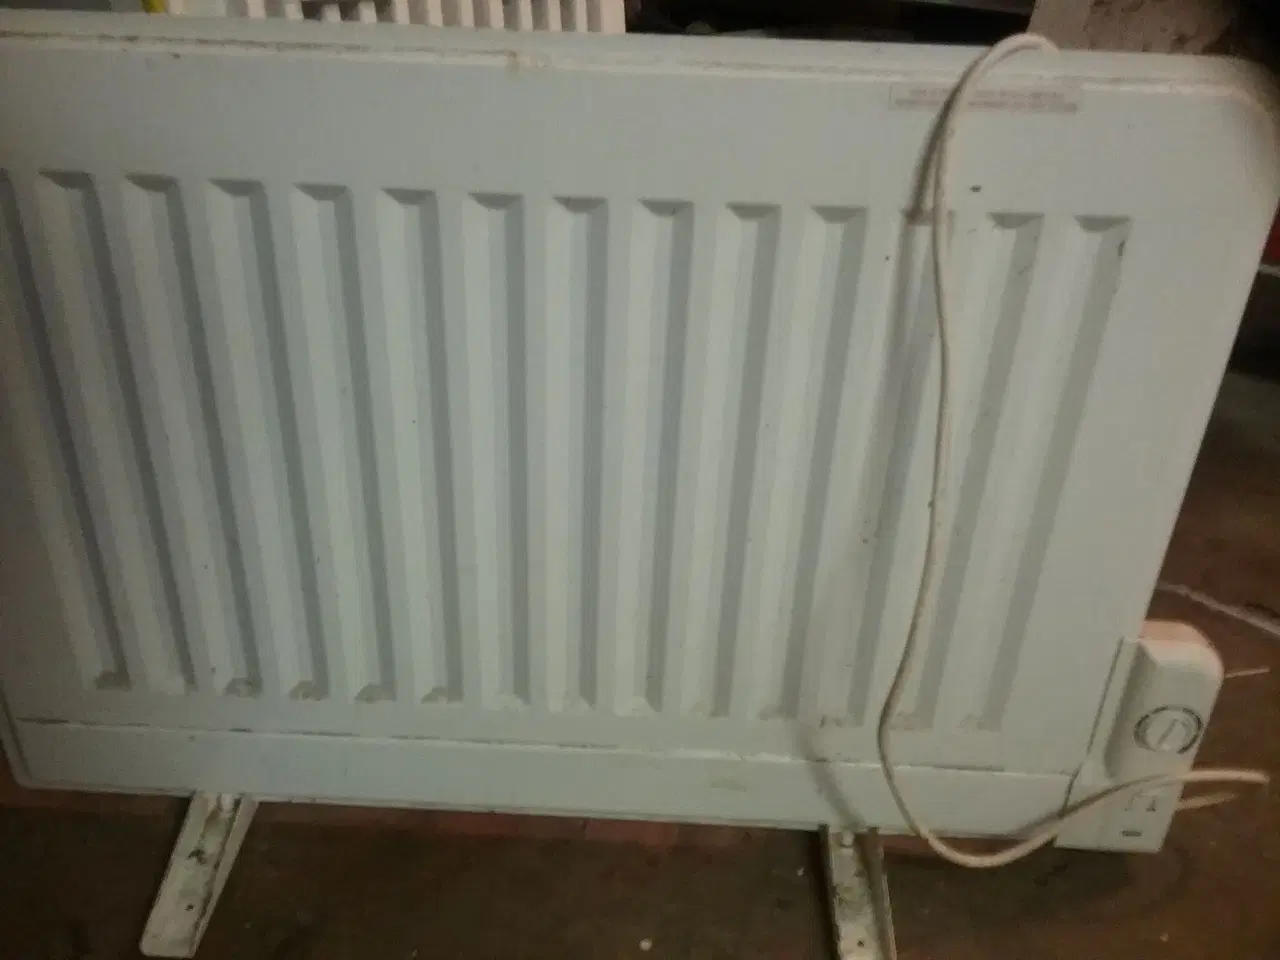 Billede 1 - El radiator